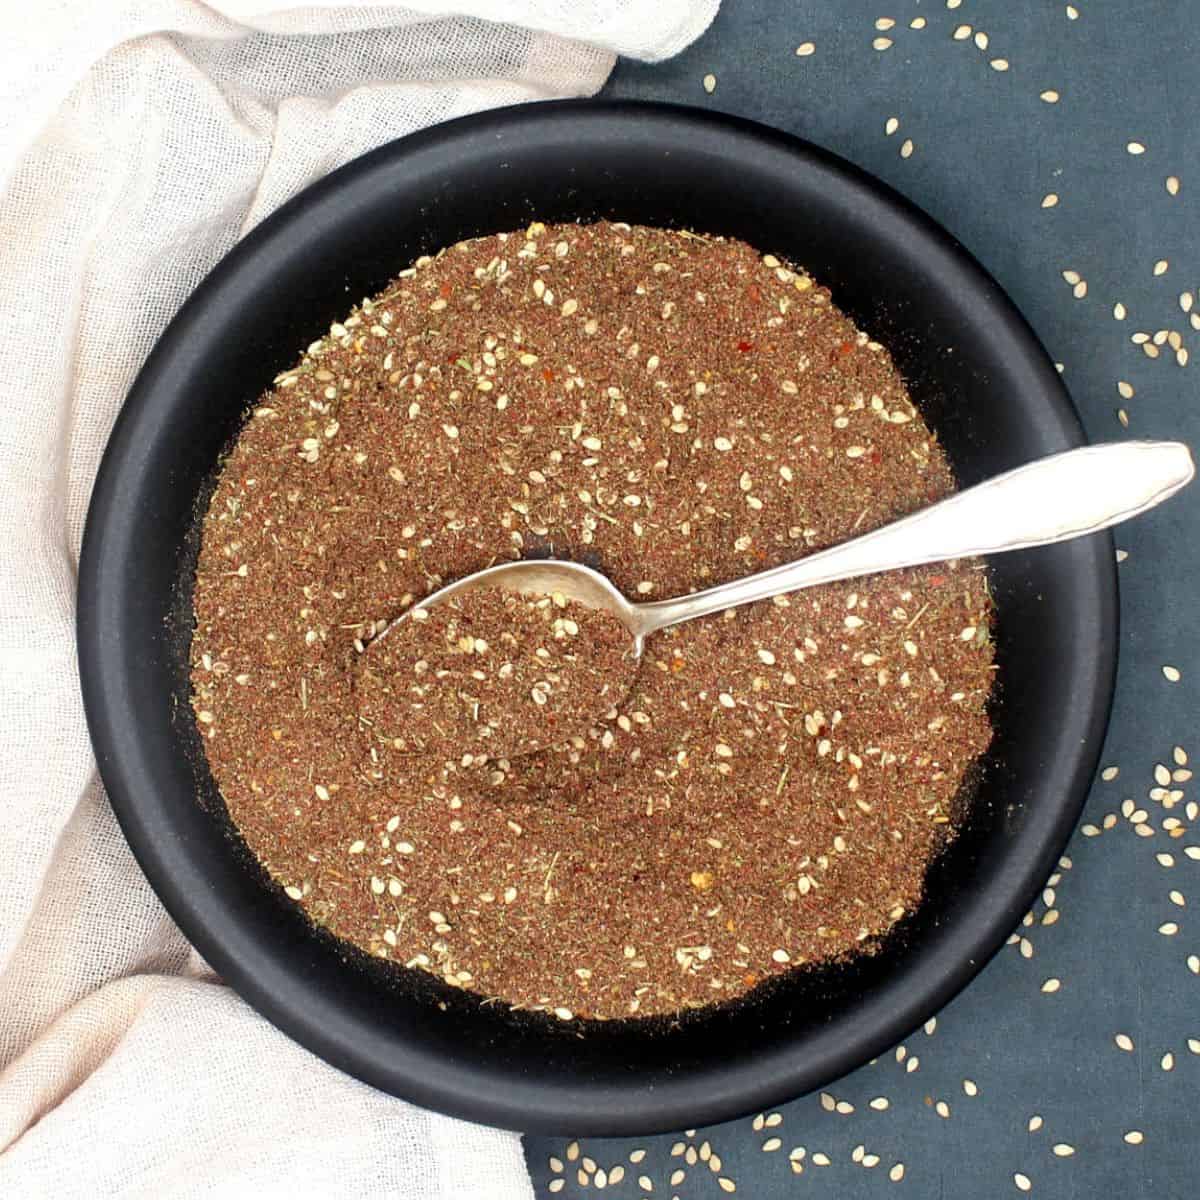 Garam Masala, Za'atar and More Homemade Spice Blends - The New